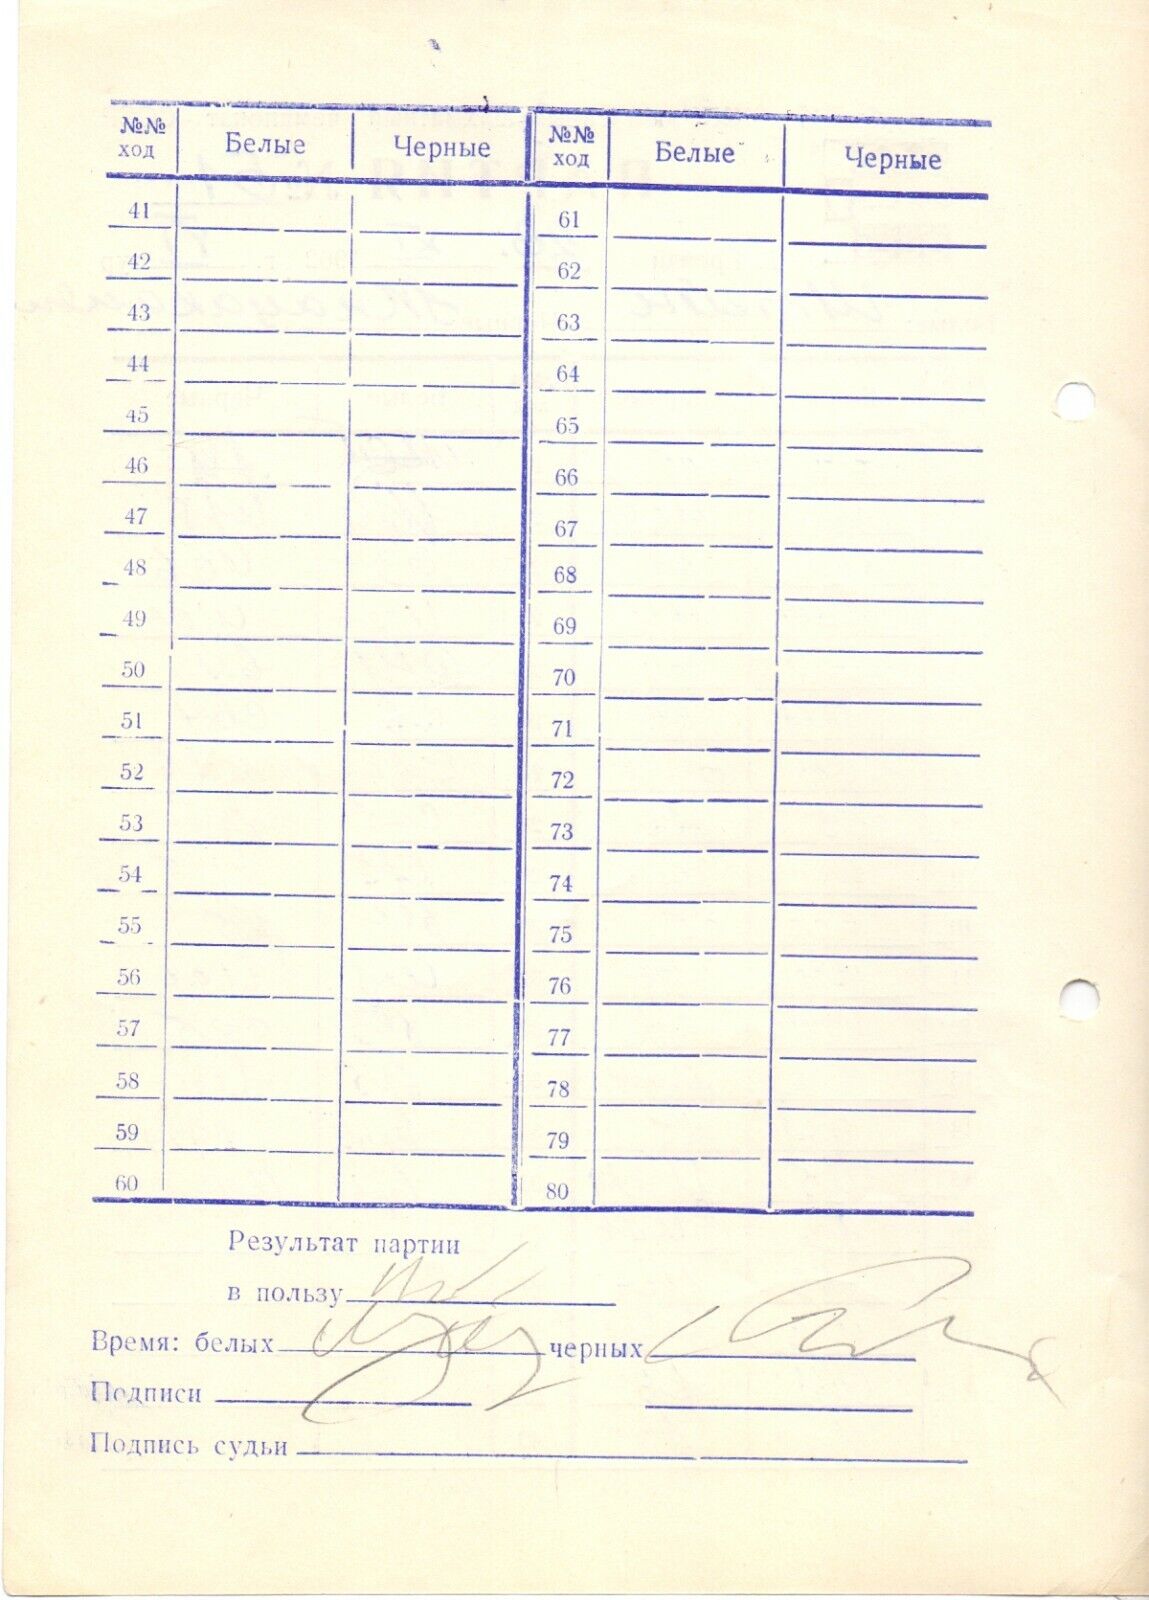 11831.Soviet Chess Scoresheet: Stein - Mnatsakanian. 1962